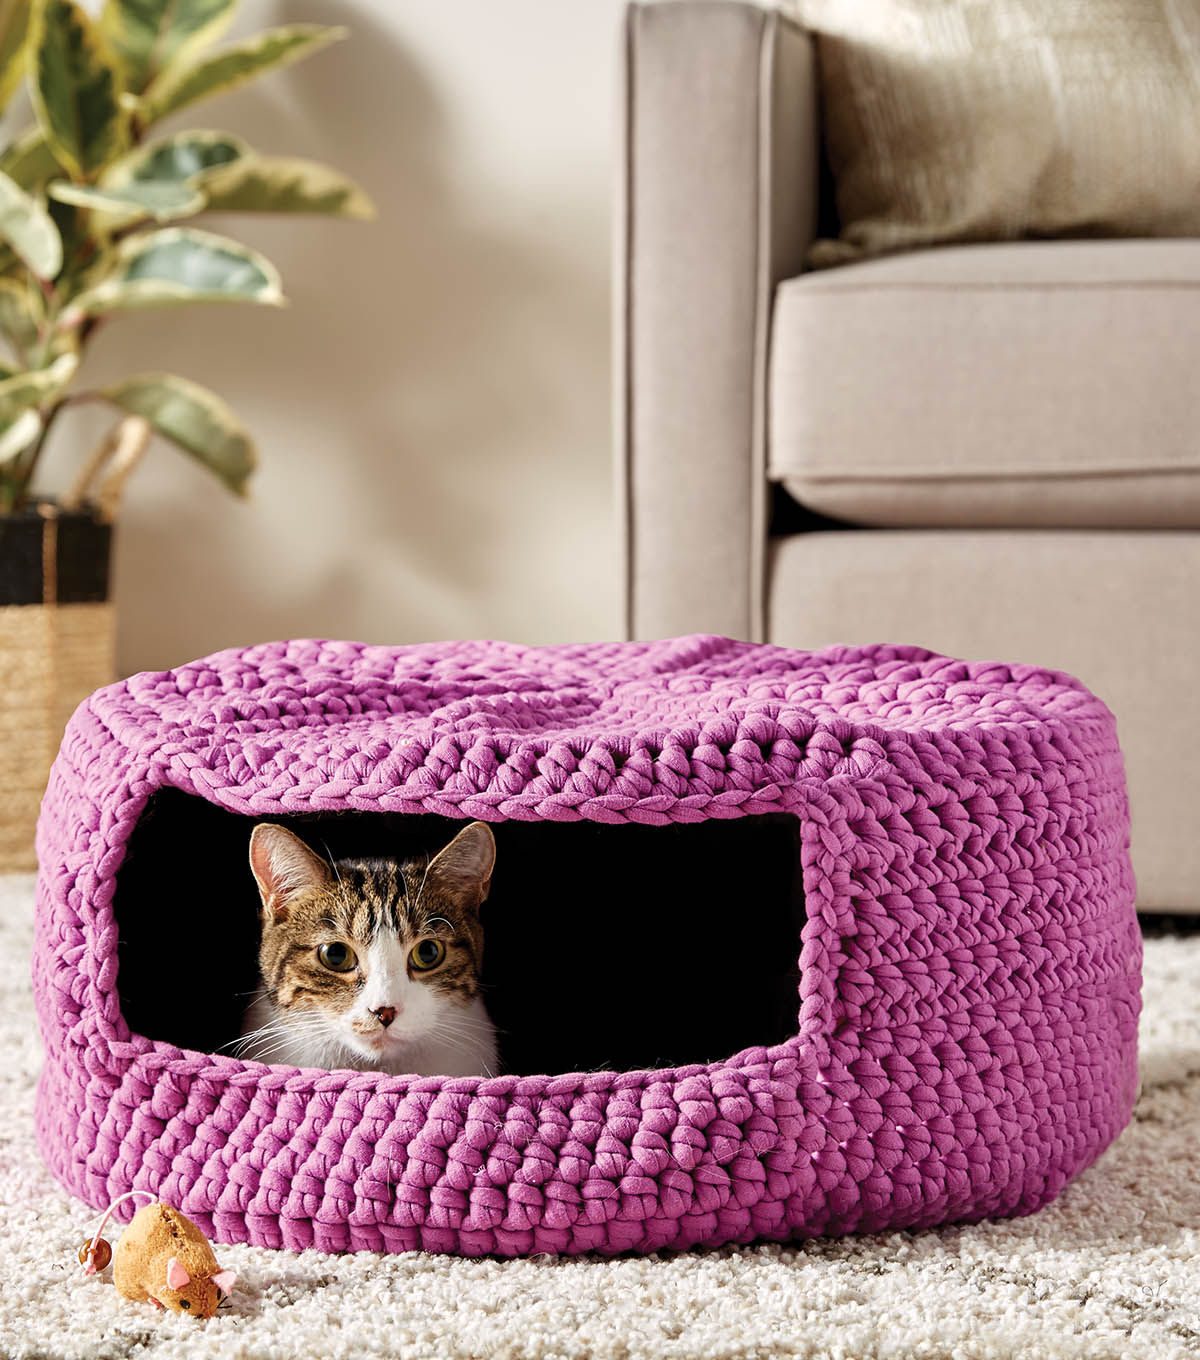 Crochet Cat Bed Pattern Free How To Make A Crochet Cat Bed Joann